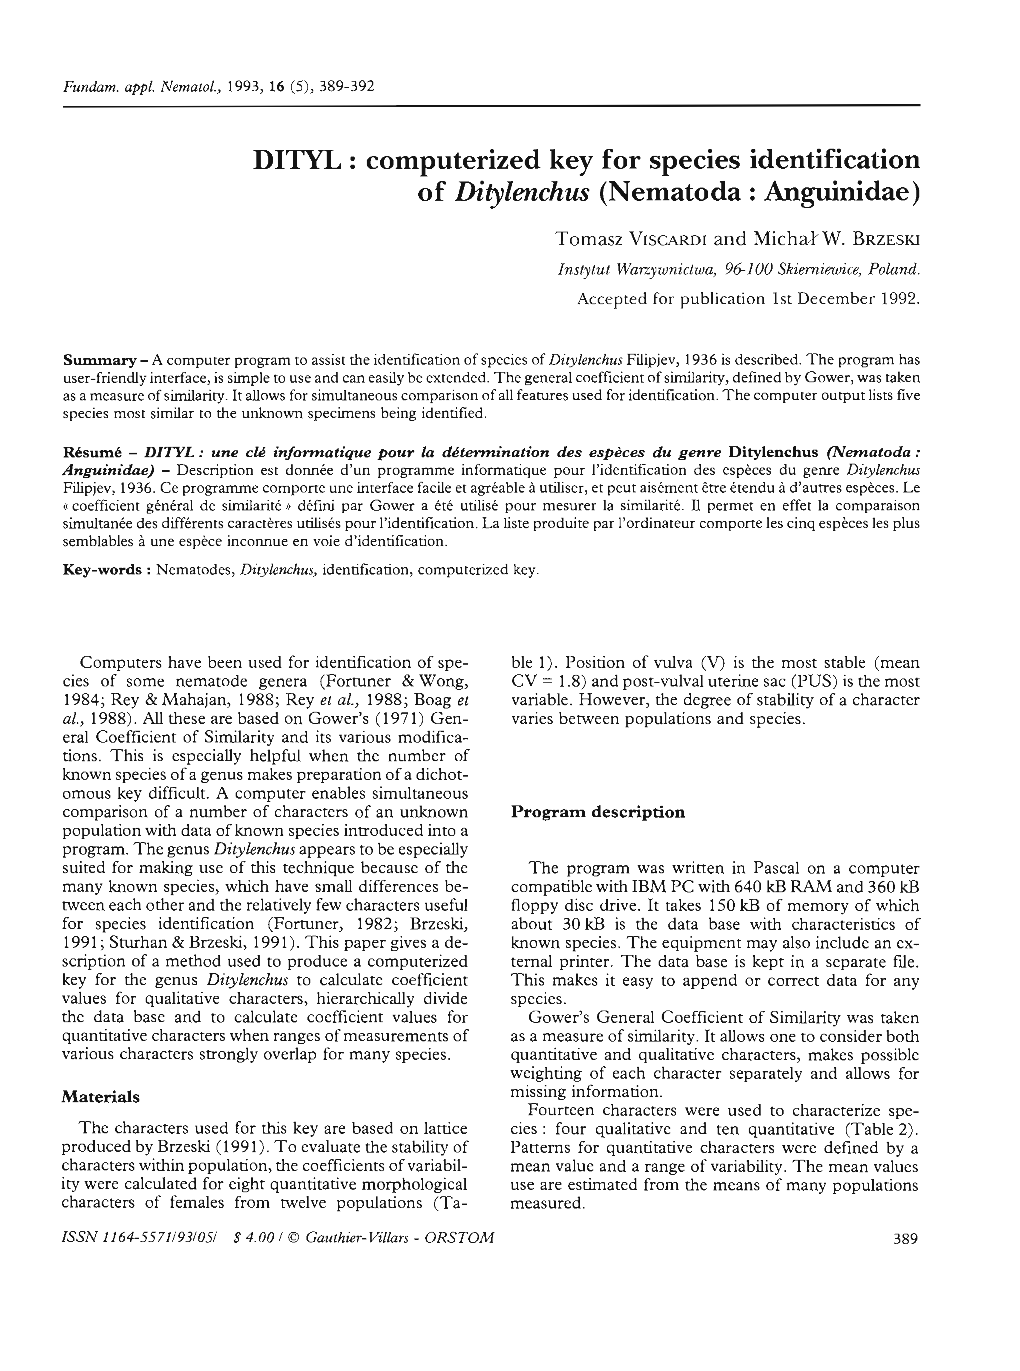 DITYL : Computerized Key for Species Identification of Ditylenchus